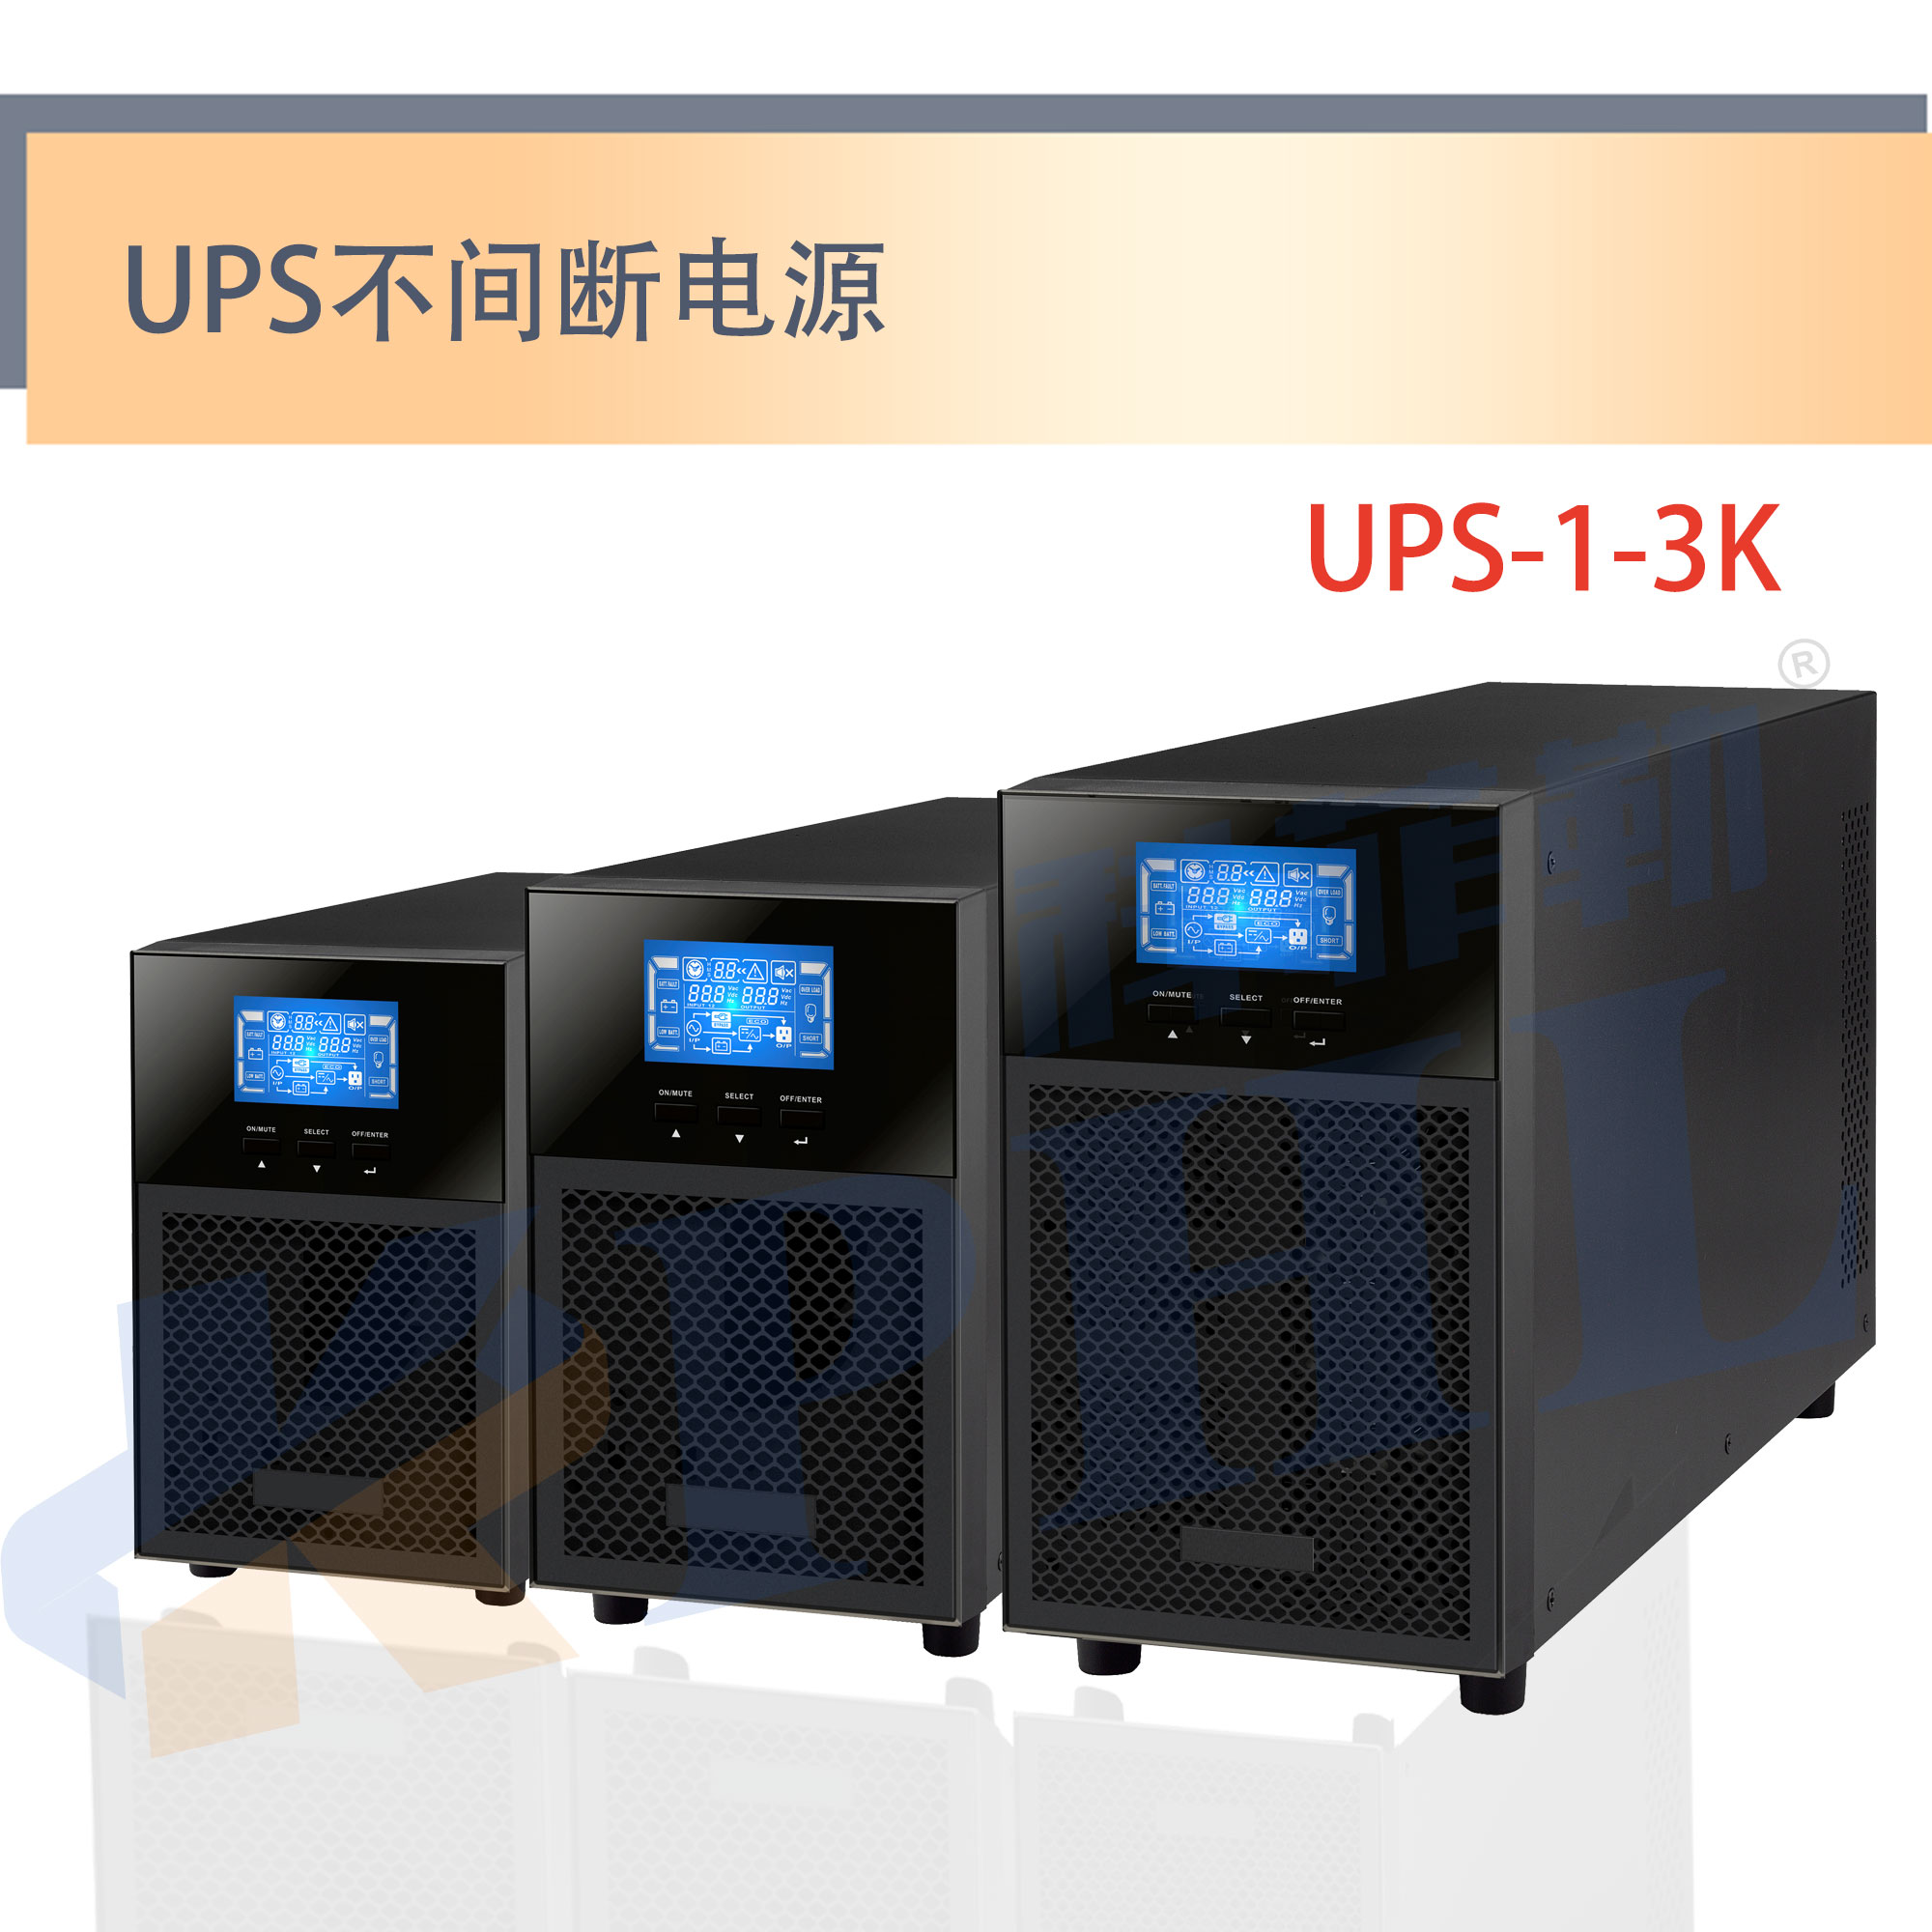 UPS-1-3K